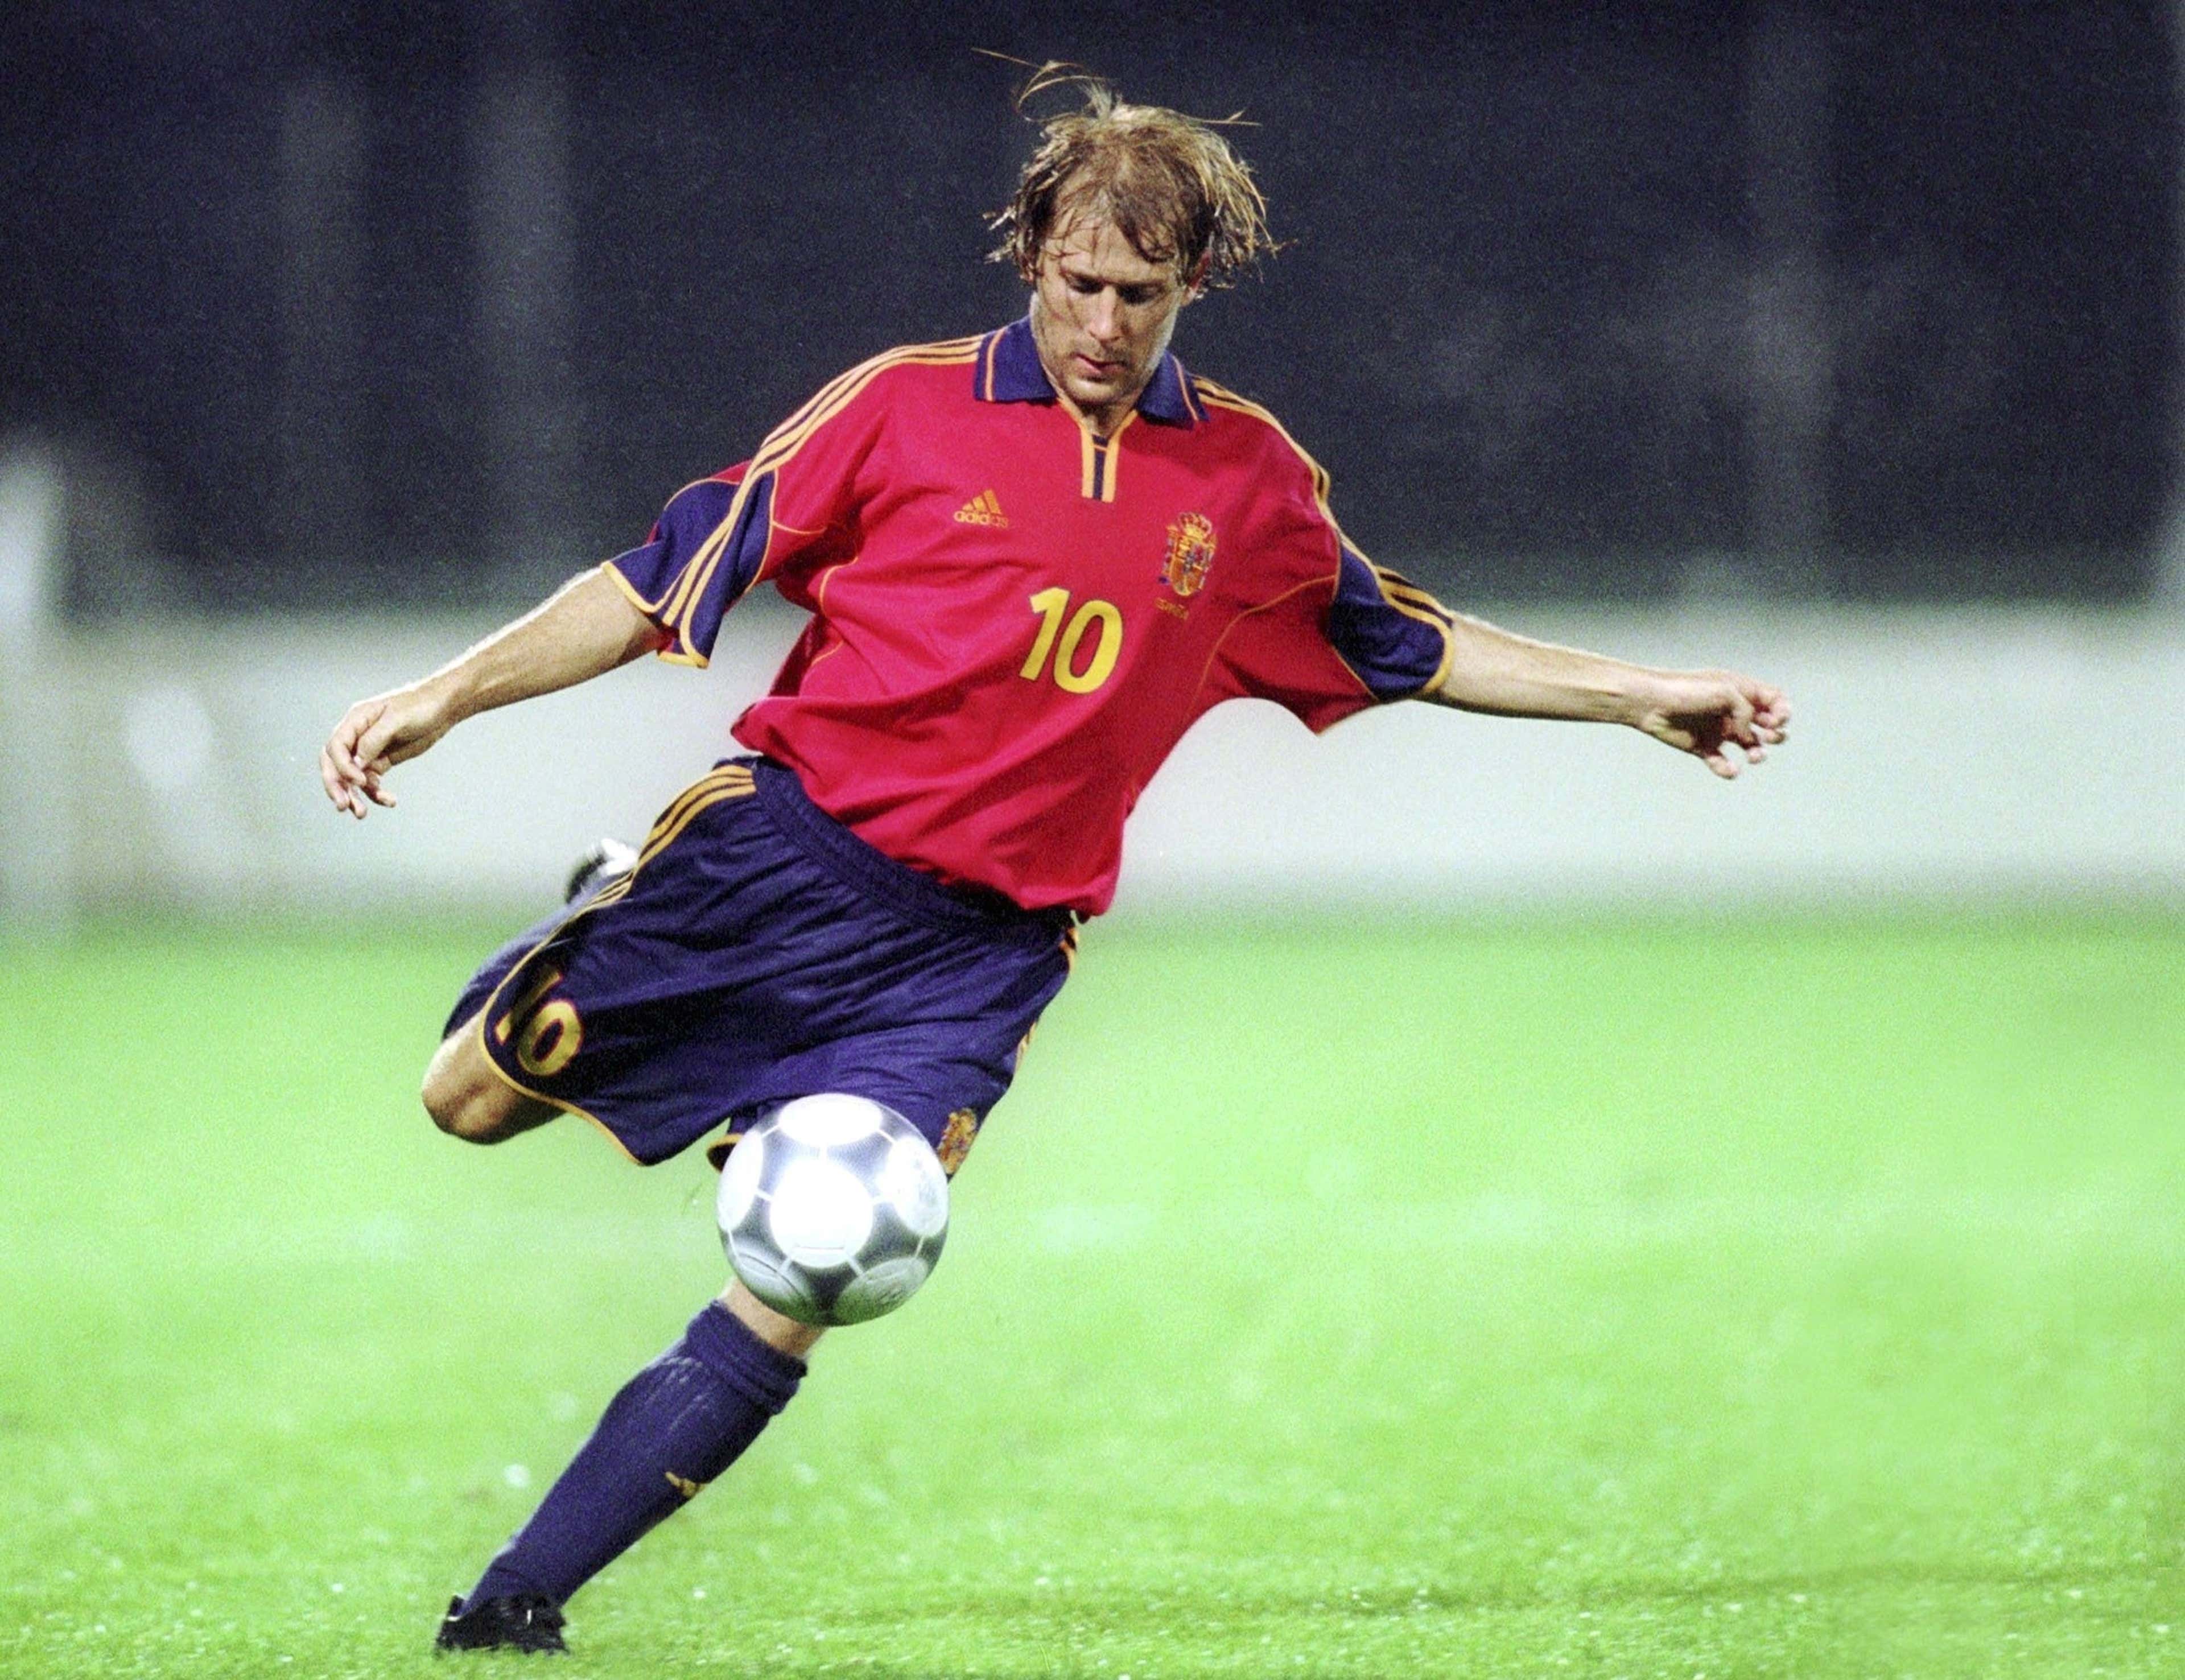 Former Spain player Gaizka Mendieta